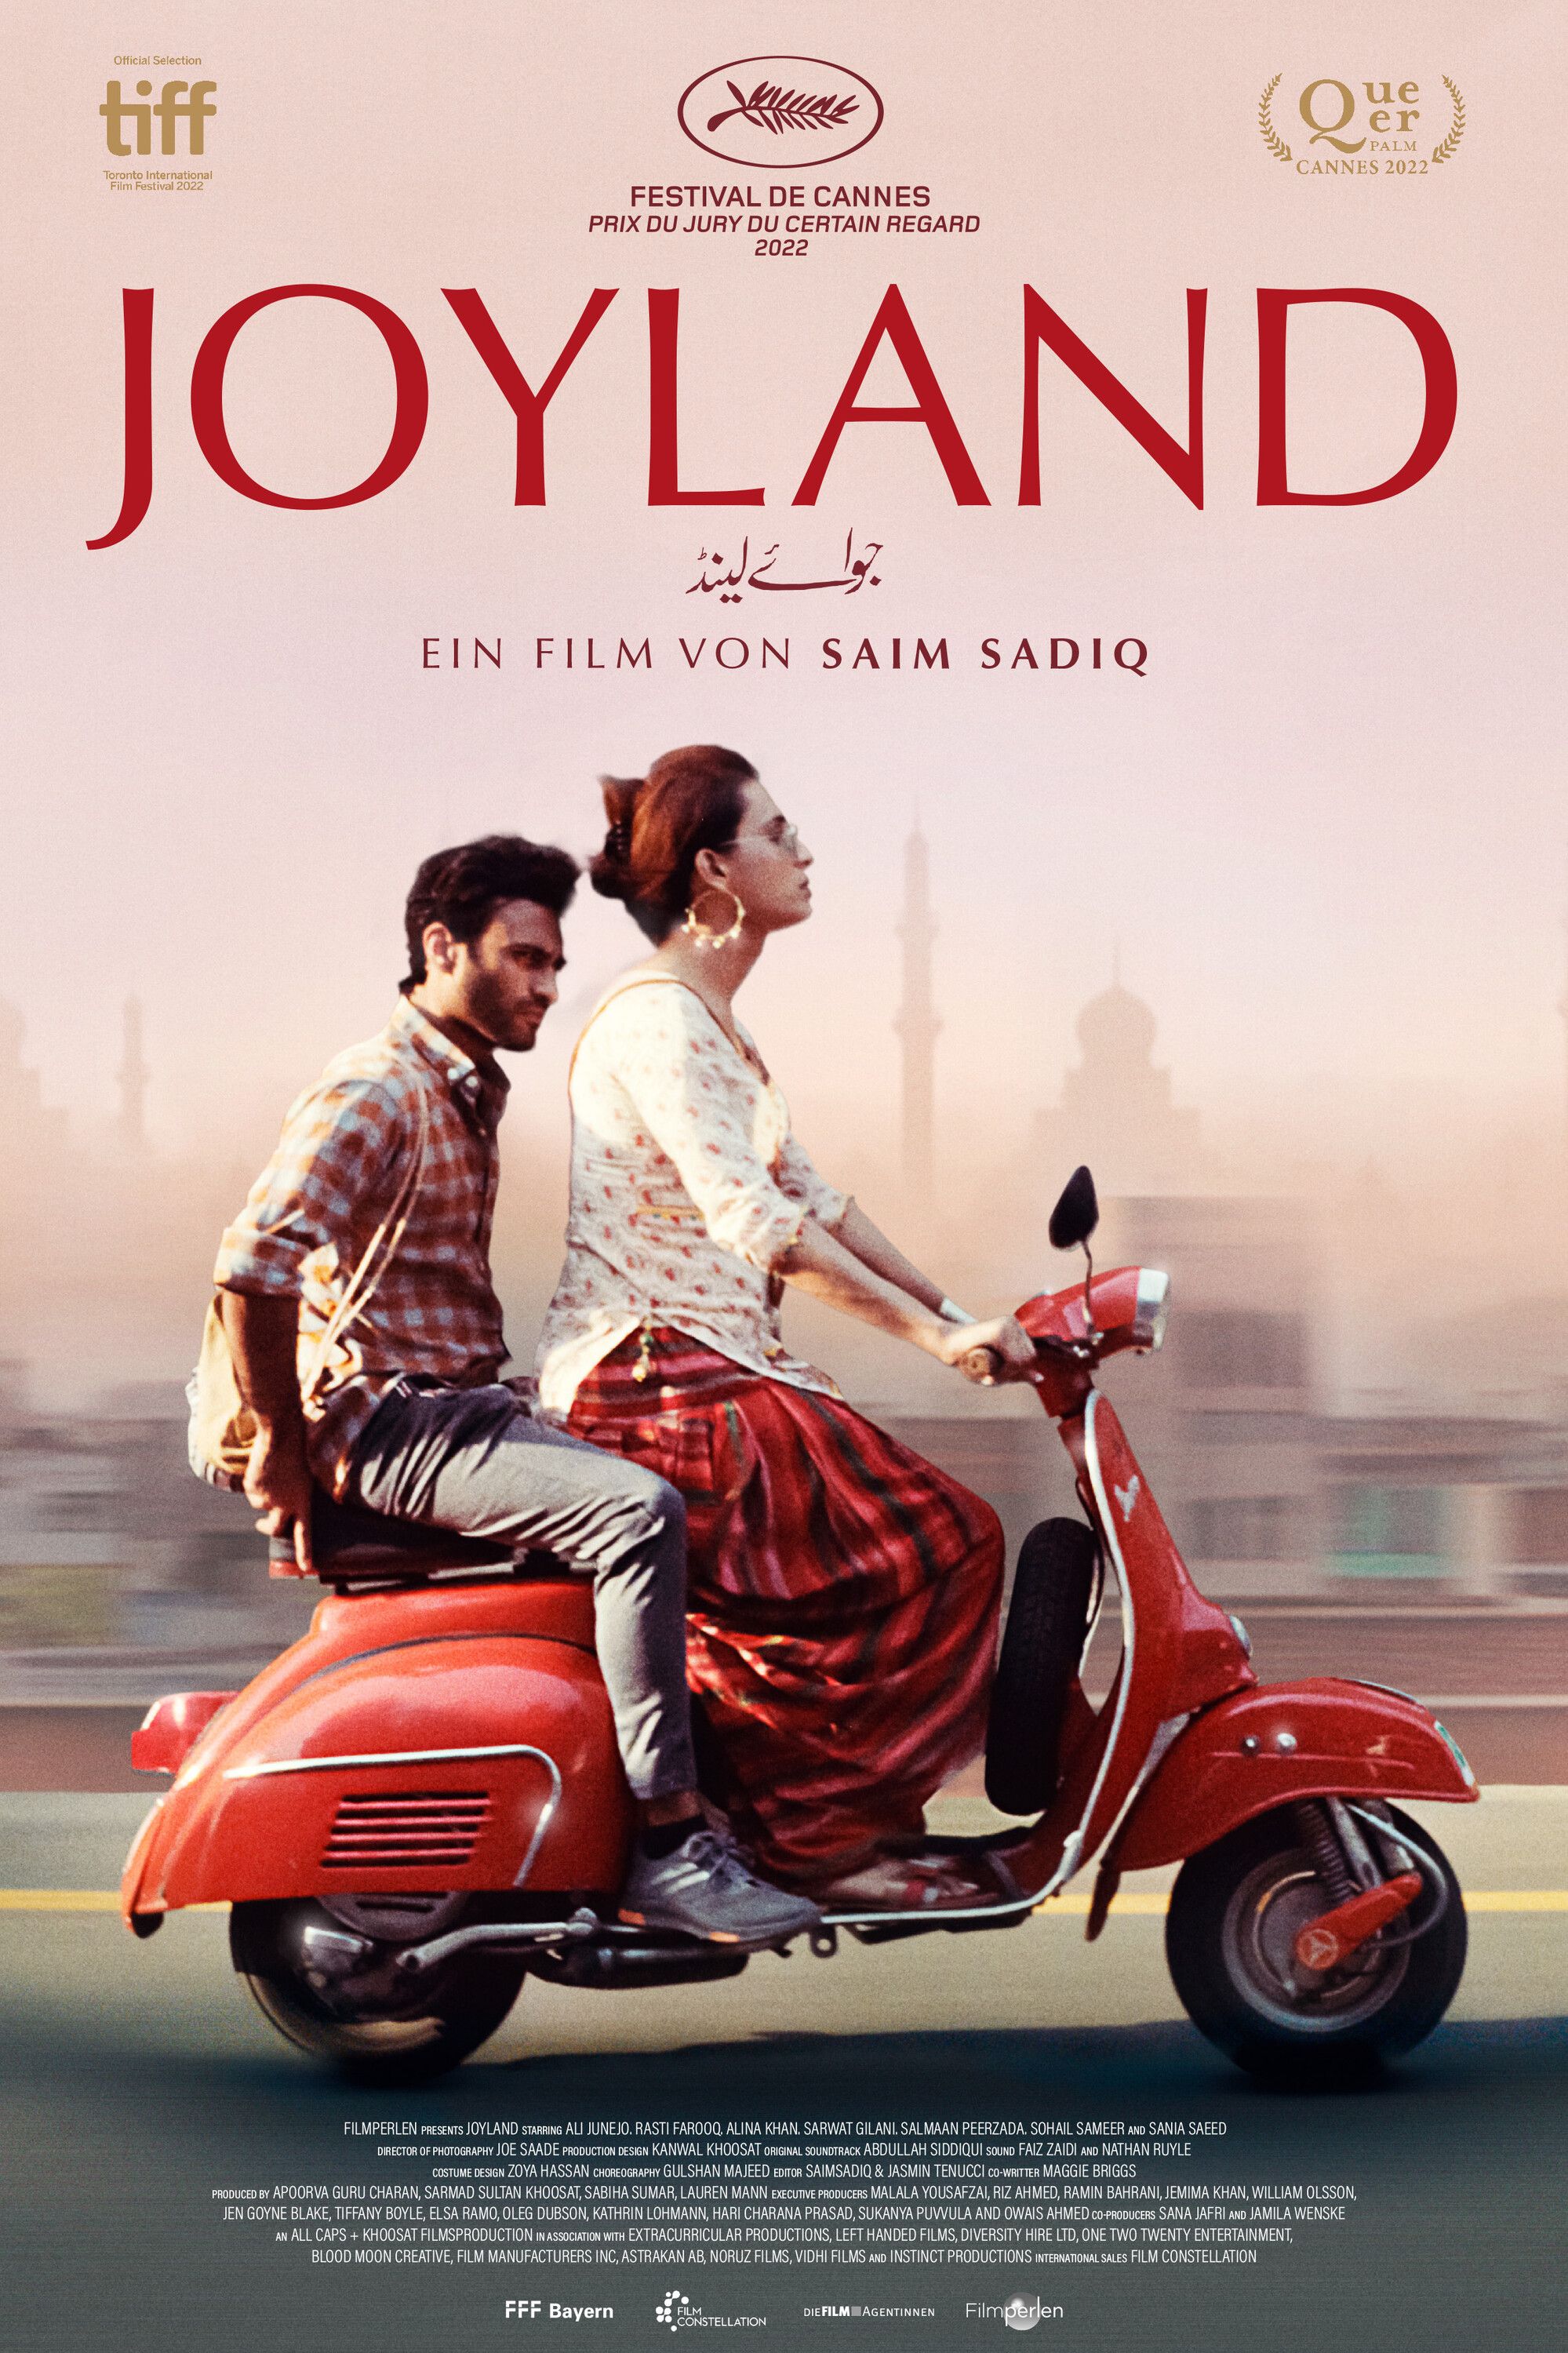 Joyland Movie Information & Trailers | KinoCheck